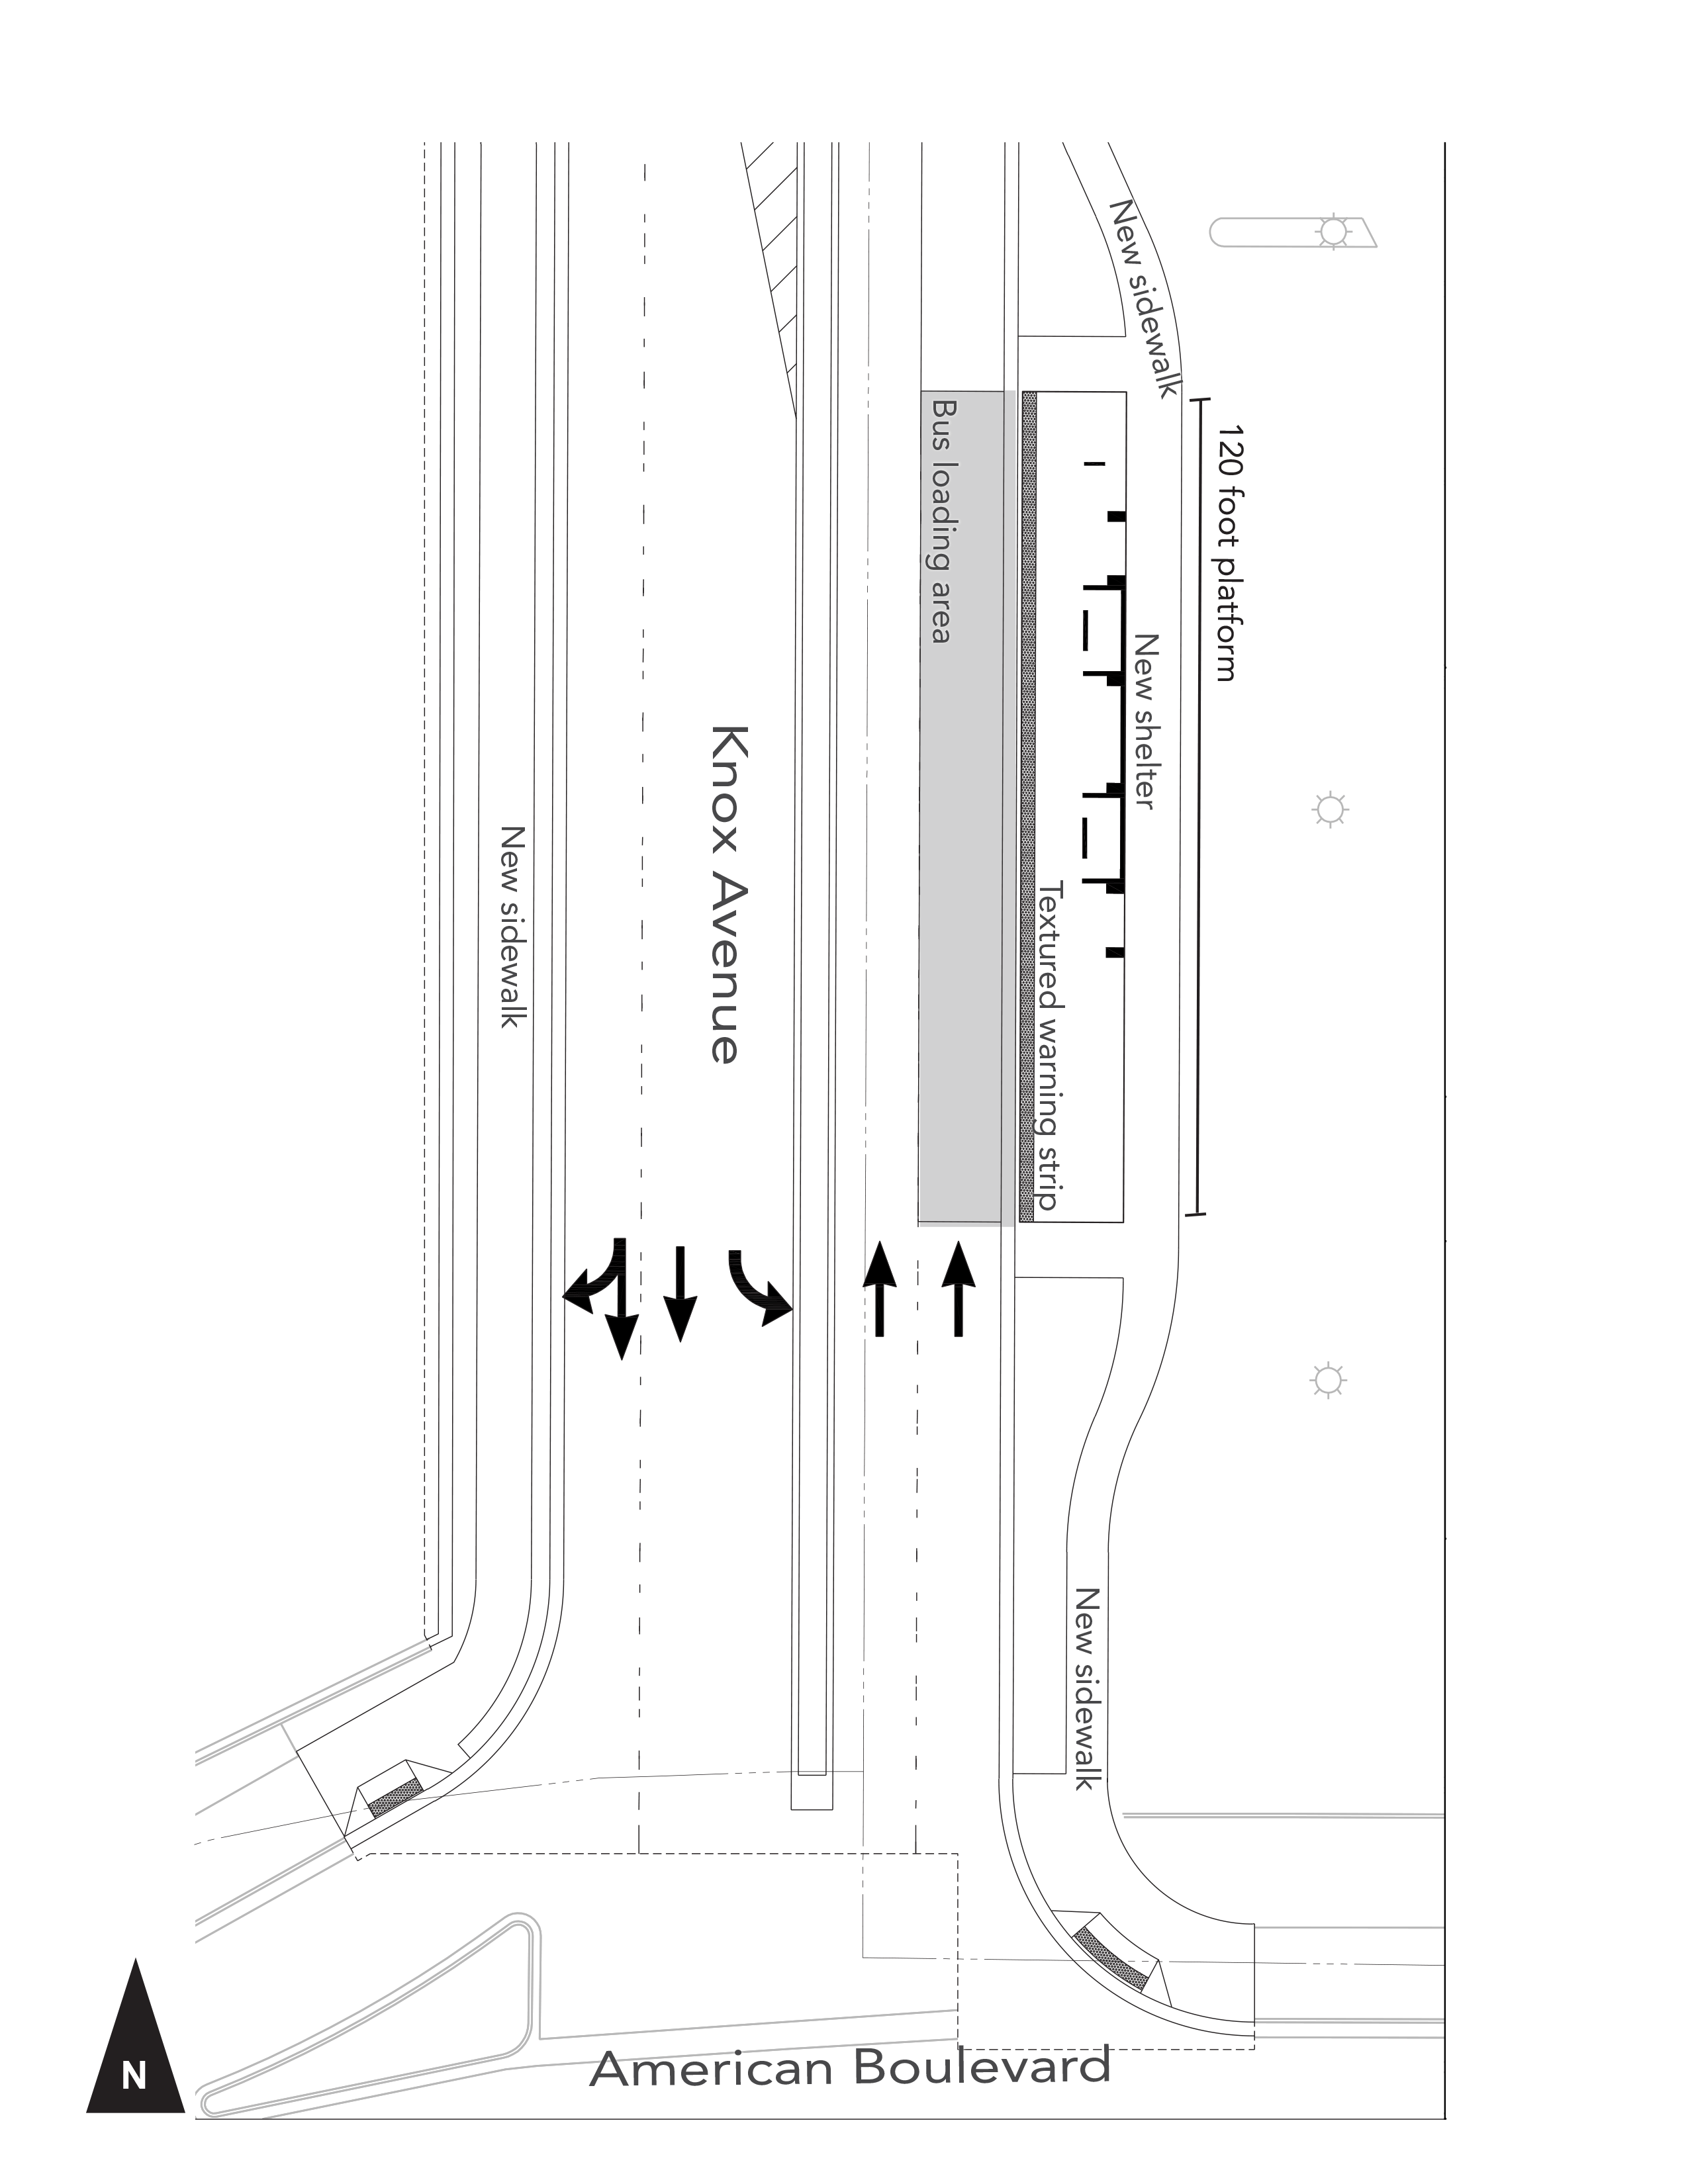 American Boulevard Station - Northbound - Site Plan